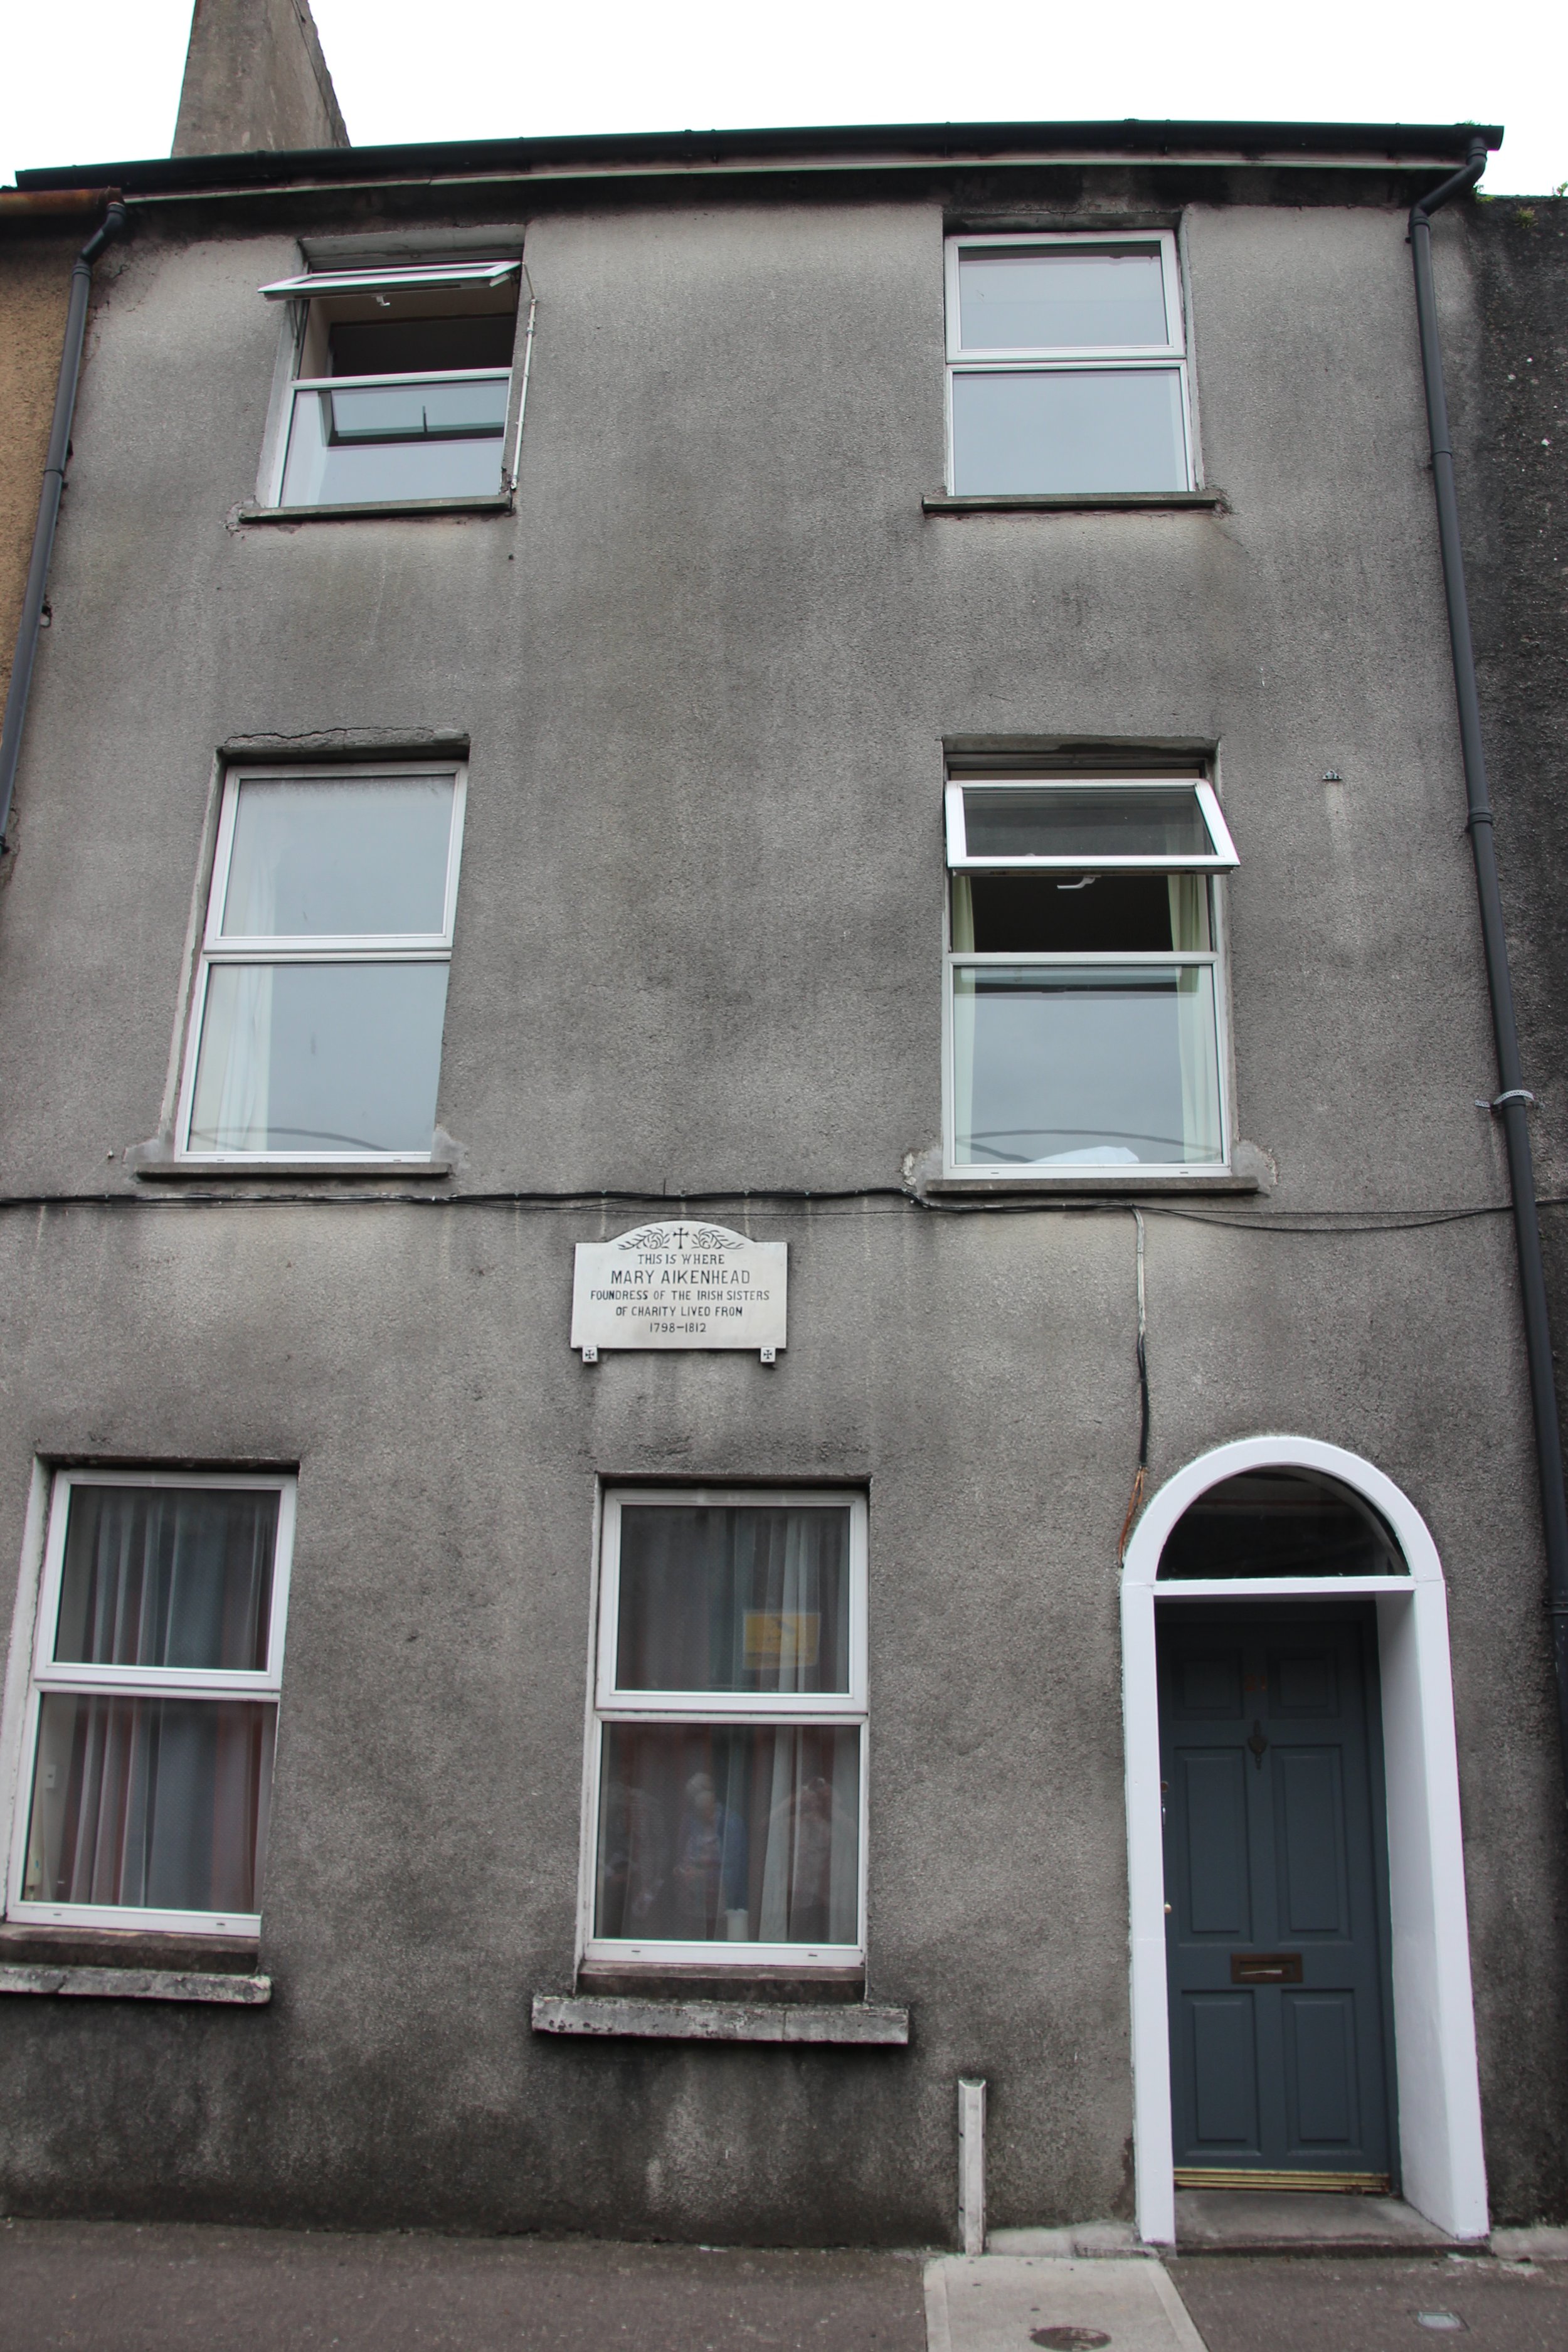 Mary Aikenhead's family home. Image courtesy of Sr Margaret Fitzgerald. Taken on a pilgrimage to Ireland.